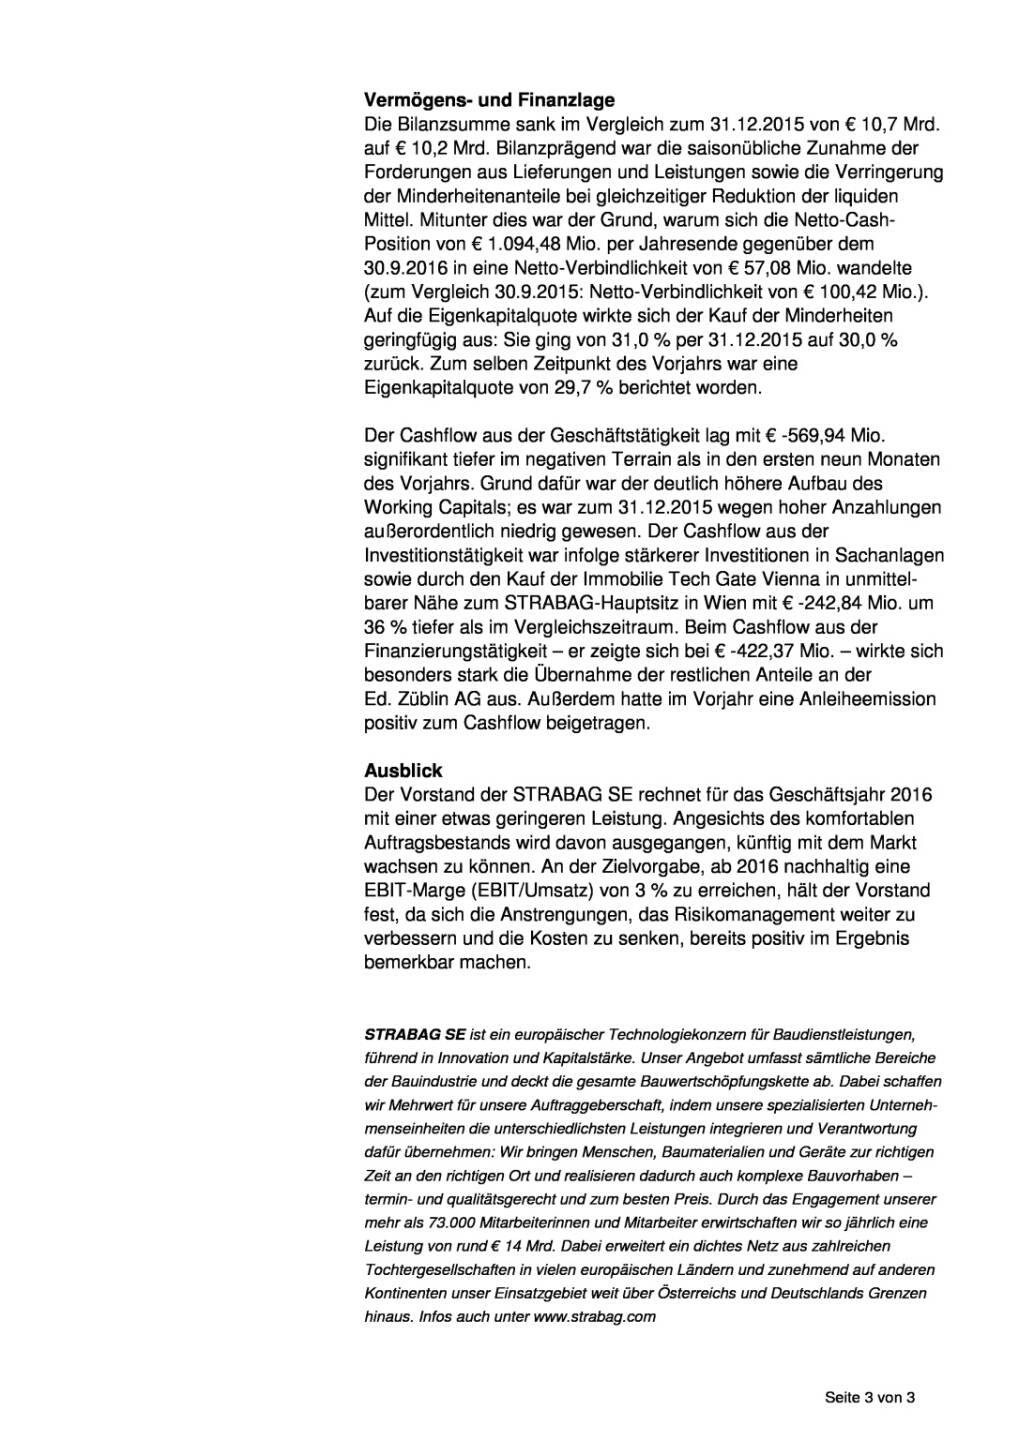 Strabag auf gutem Weg, Seite 3/3, komplettes Dokument unter http://boerse-social.com/static/uploads/file_1999_strabag_auf_gutem_weg.pdf